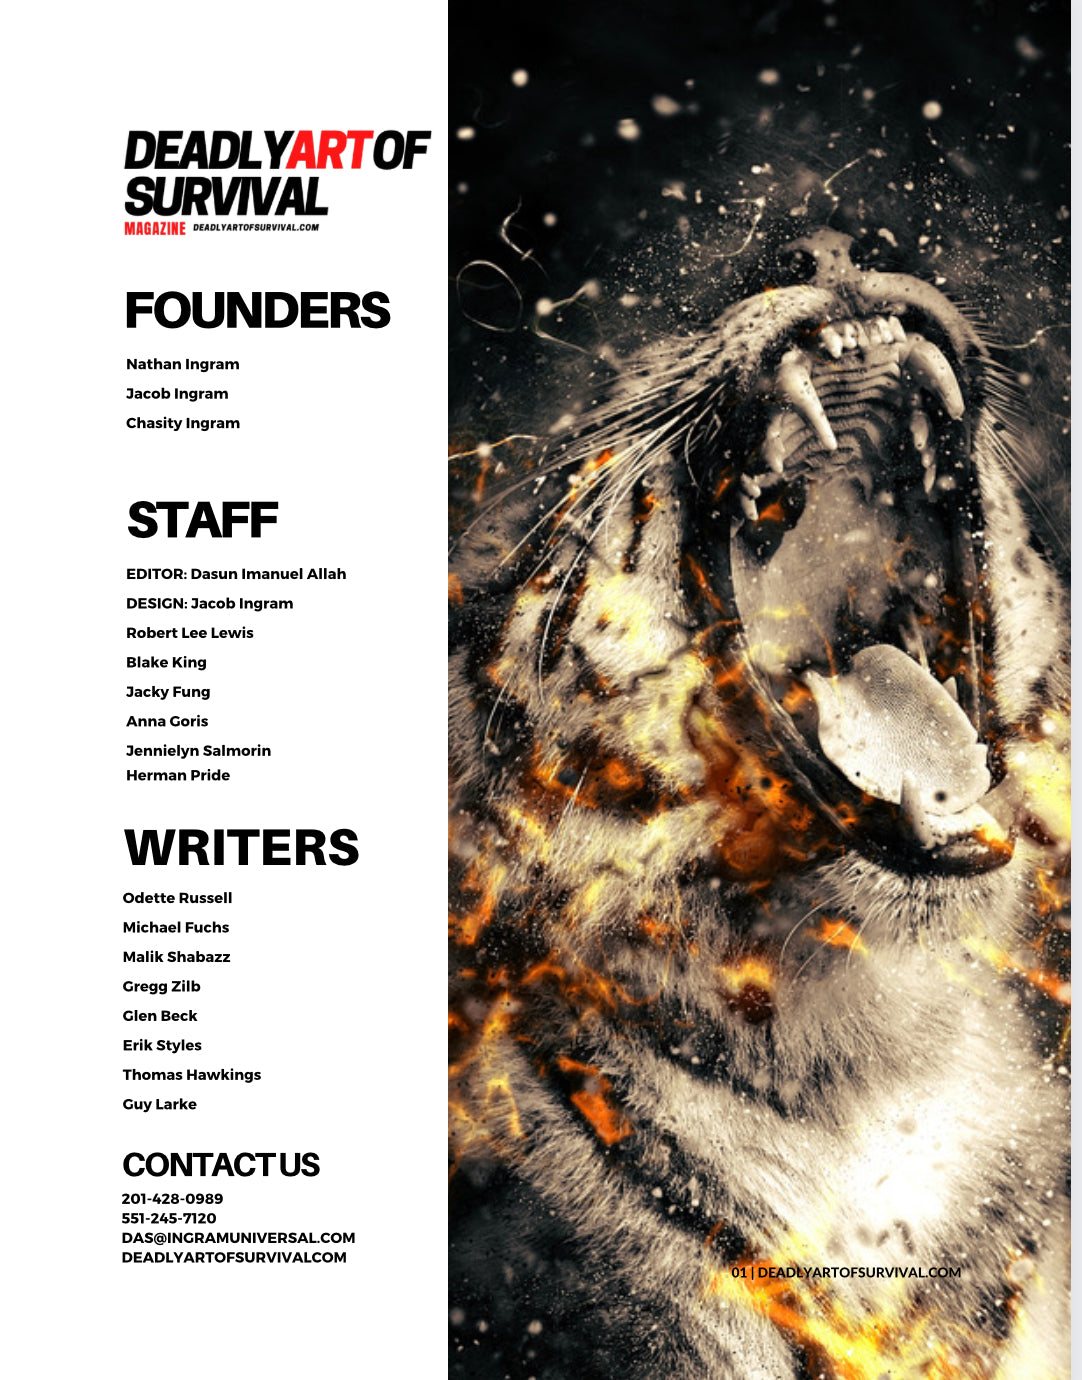 Deadly Art of Survival Magazine 15th Edition: Featuring GM Darryl Starks Sr. The #1 Martial Arts Magazine Worldwide deadlyartofsurvival.com